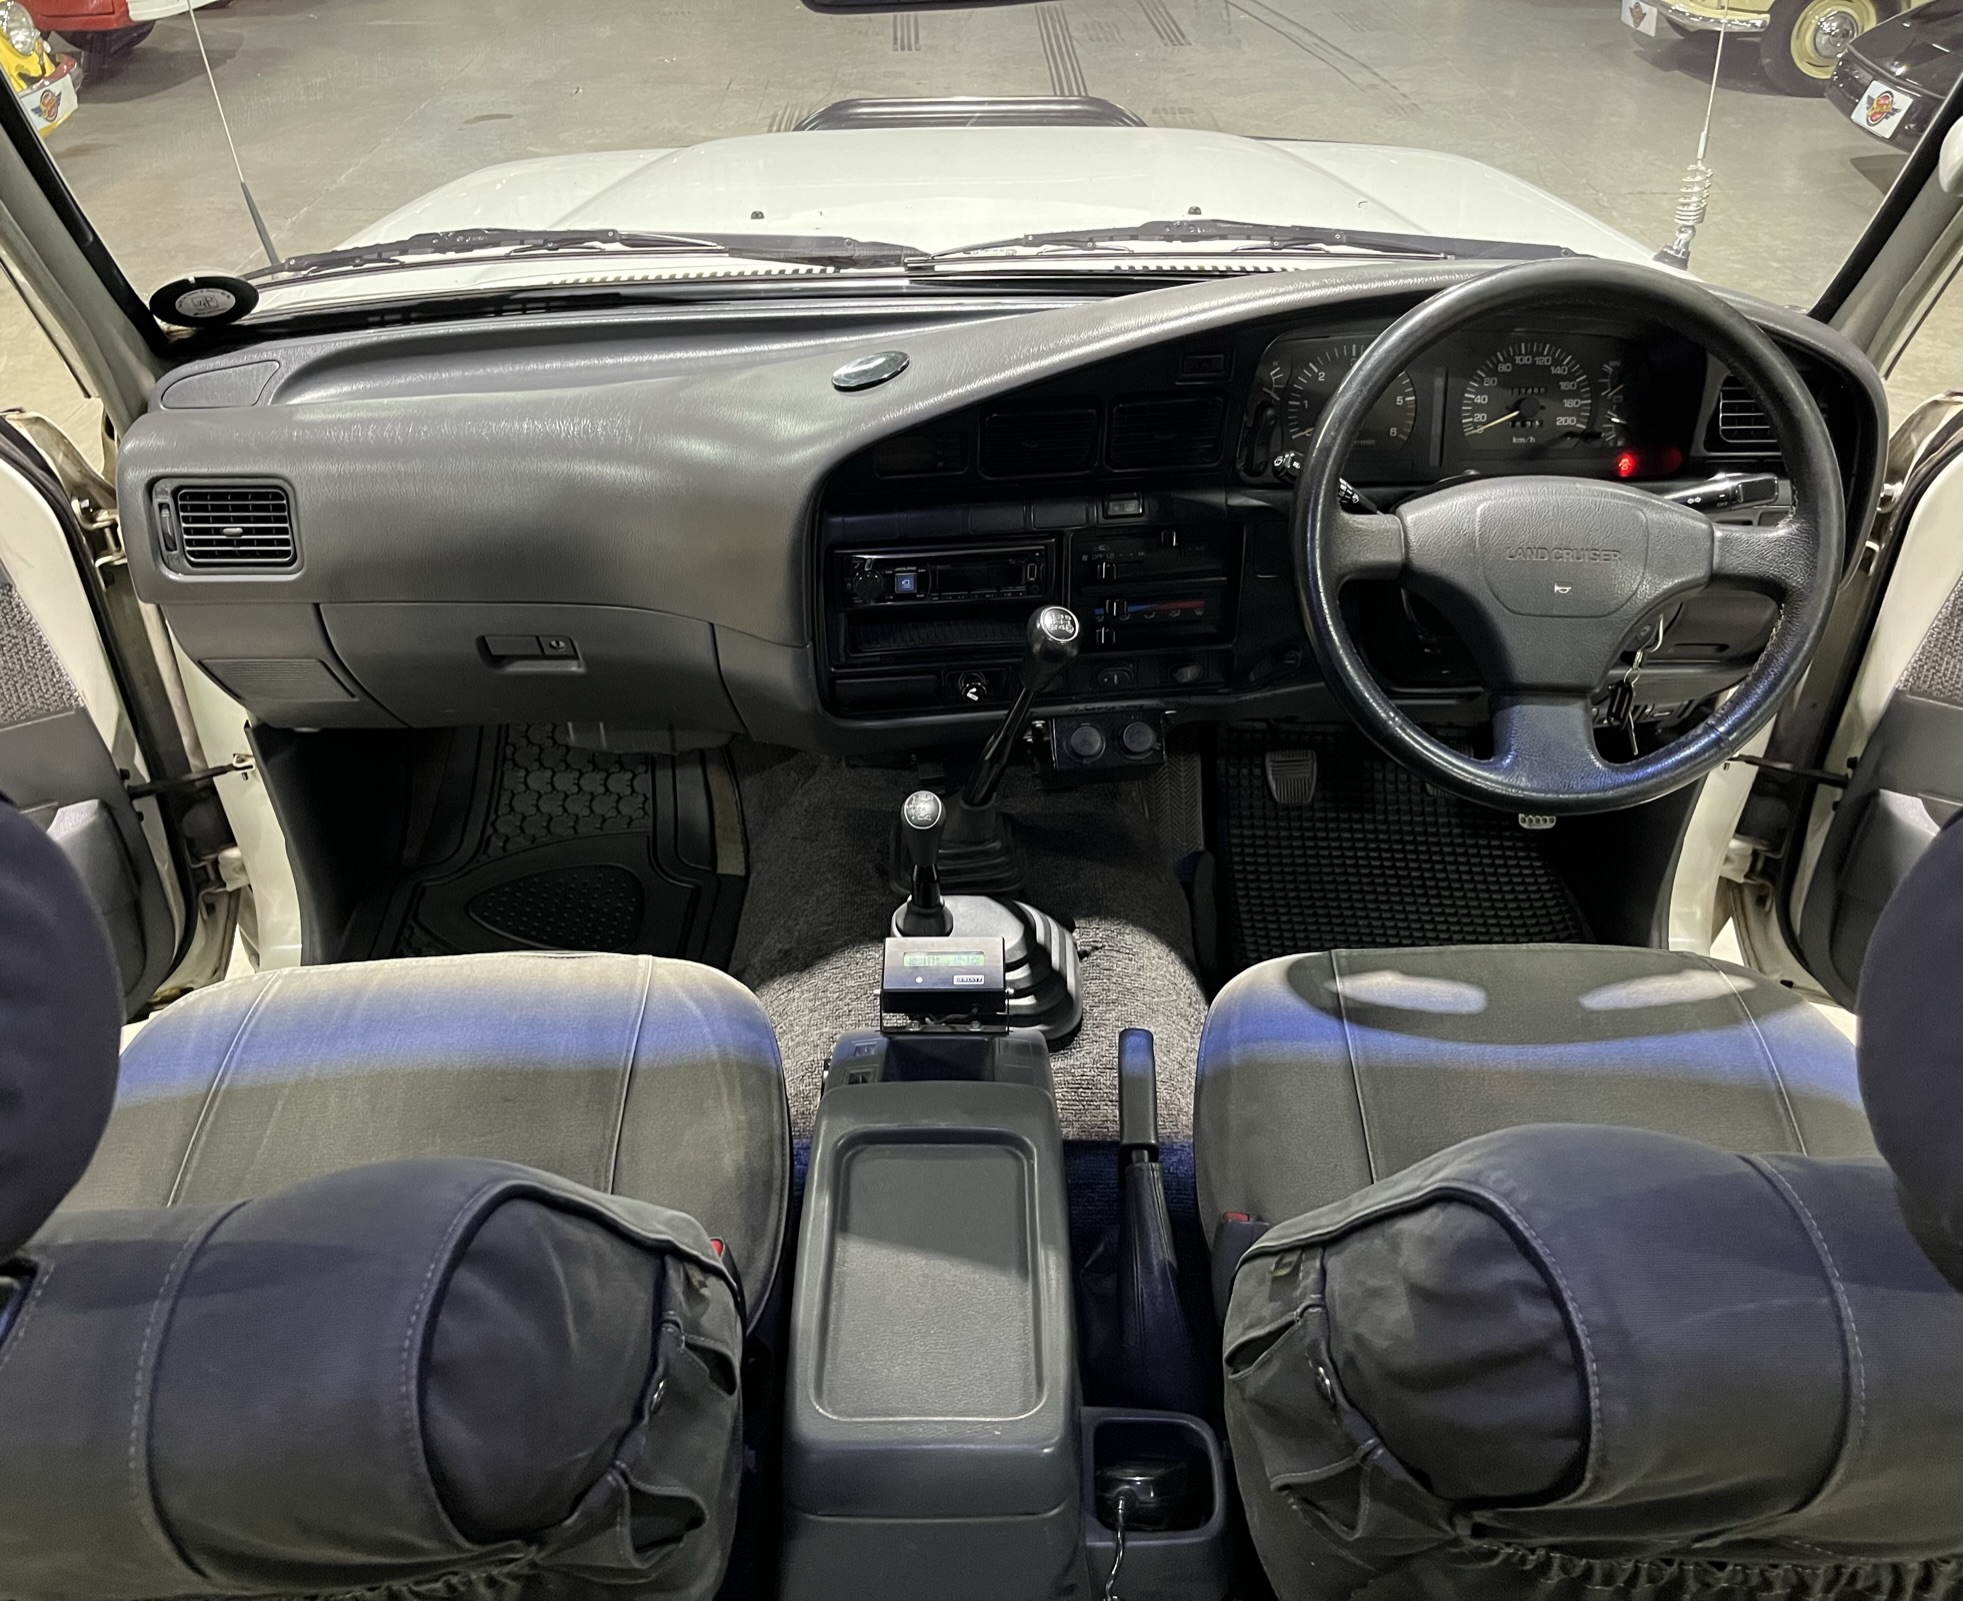 1996 Toyota Land Cruiser 80 Series Automatic